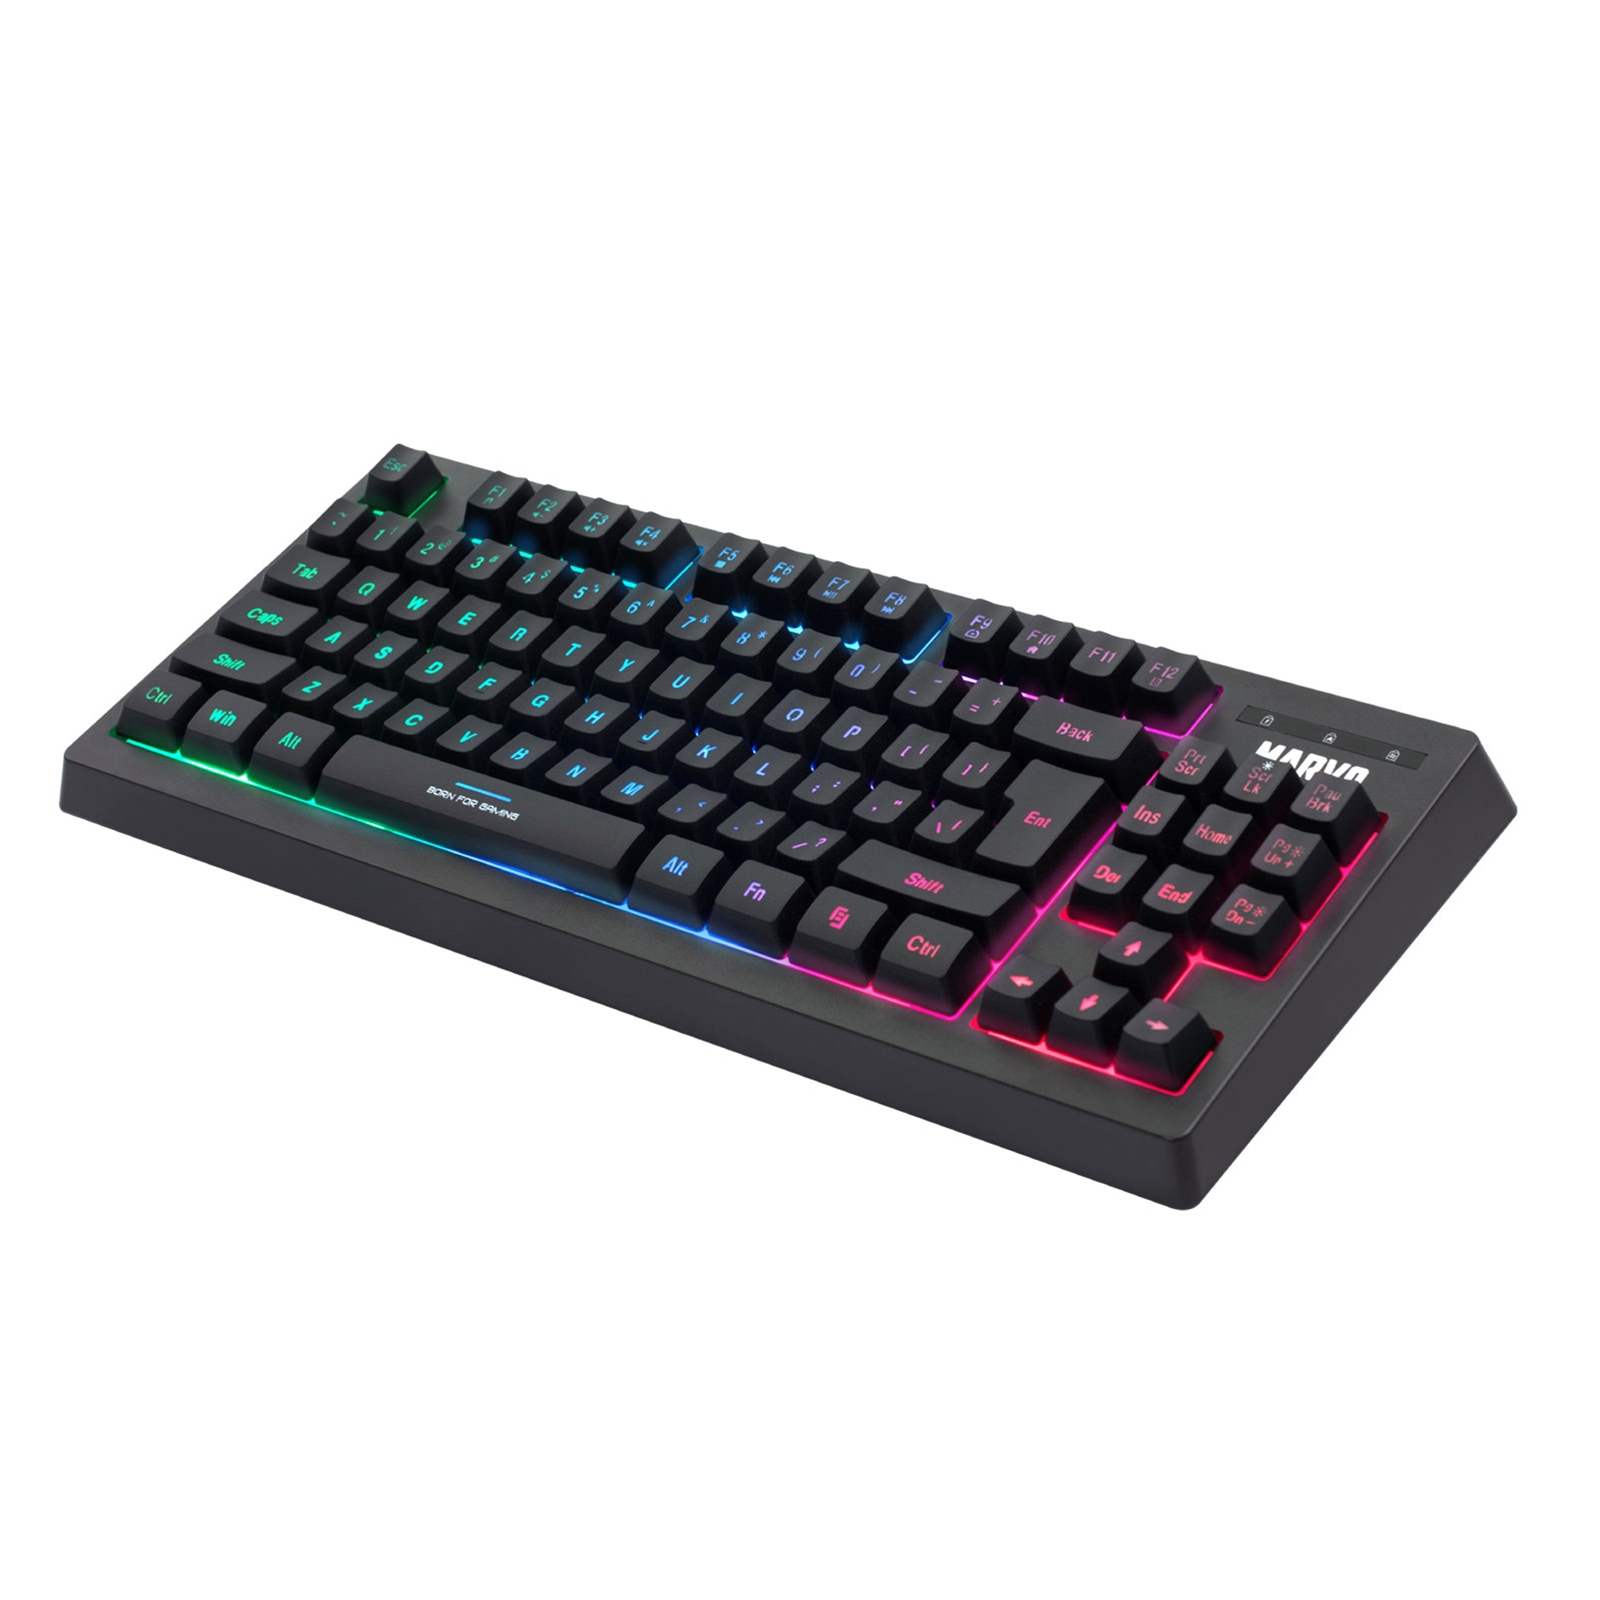 Marvo Scorpion K607 80% TKL Layout Gaming Keyboard, Multimedia, USB 2.0, Full Anti-ghosting, Ergonomic Compact Design, 3 Colour LED backlit with Adjustable Brightness, Black